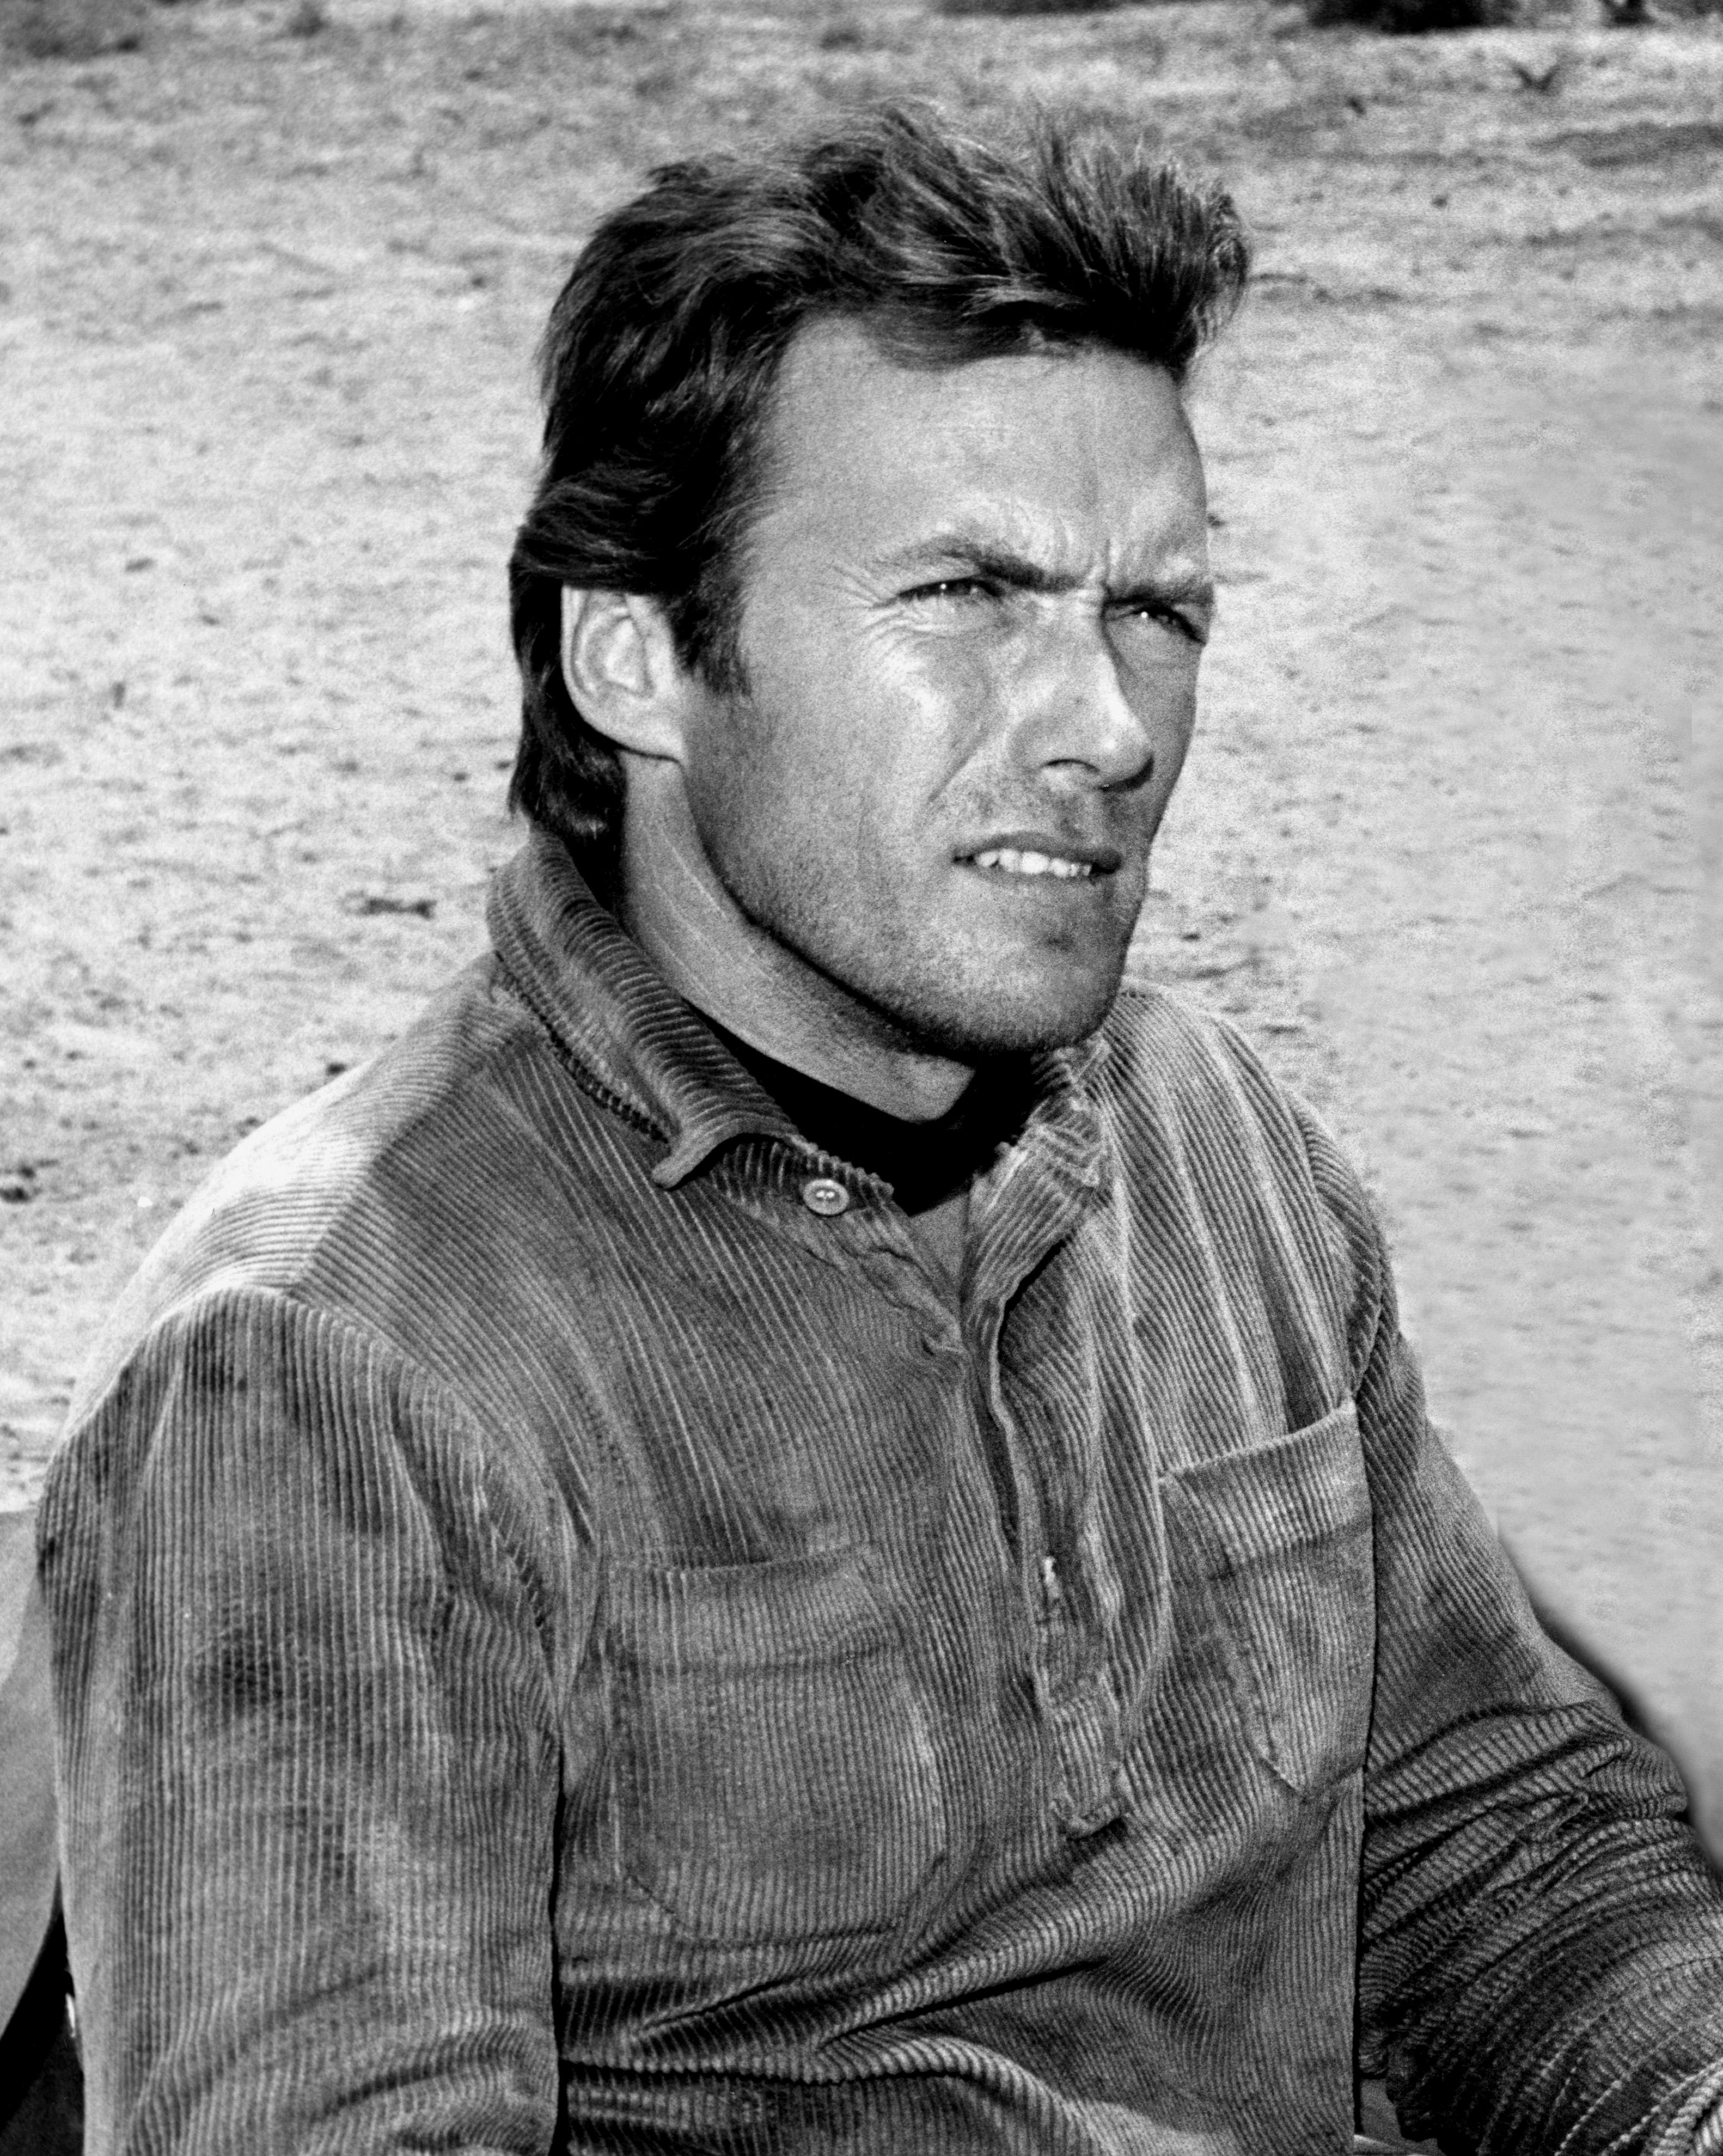 Unknown Portrait Photograph - Clint Eastwood: Handsome Star Actor II Globe Photos Fine Art Print